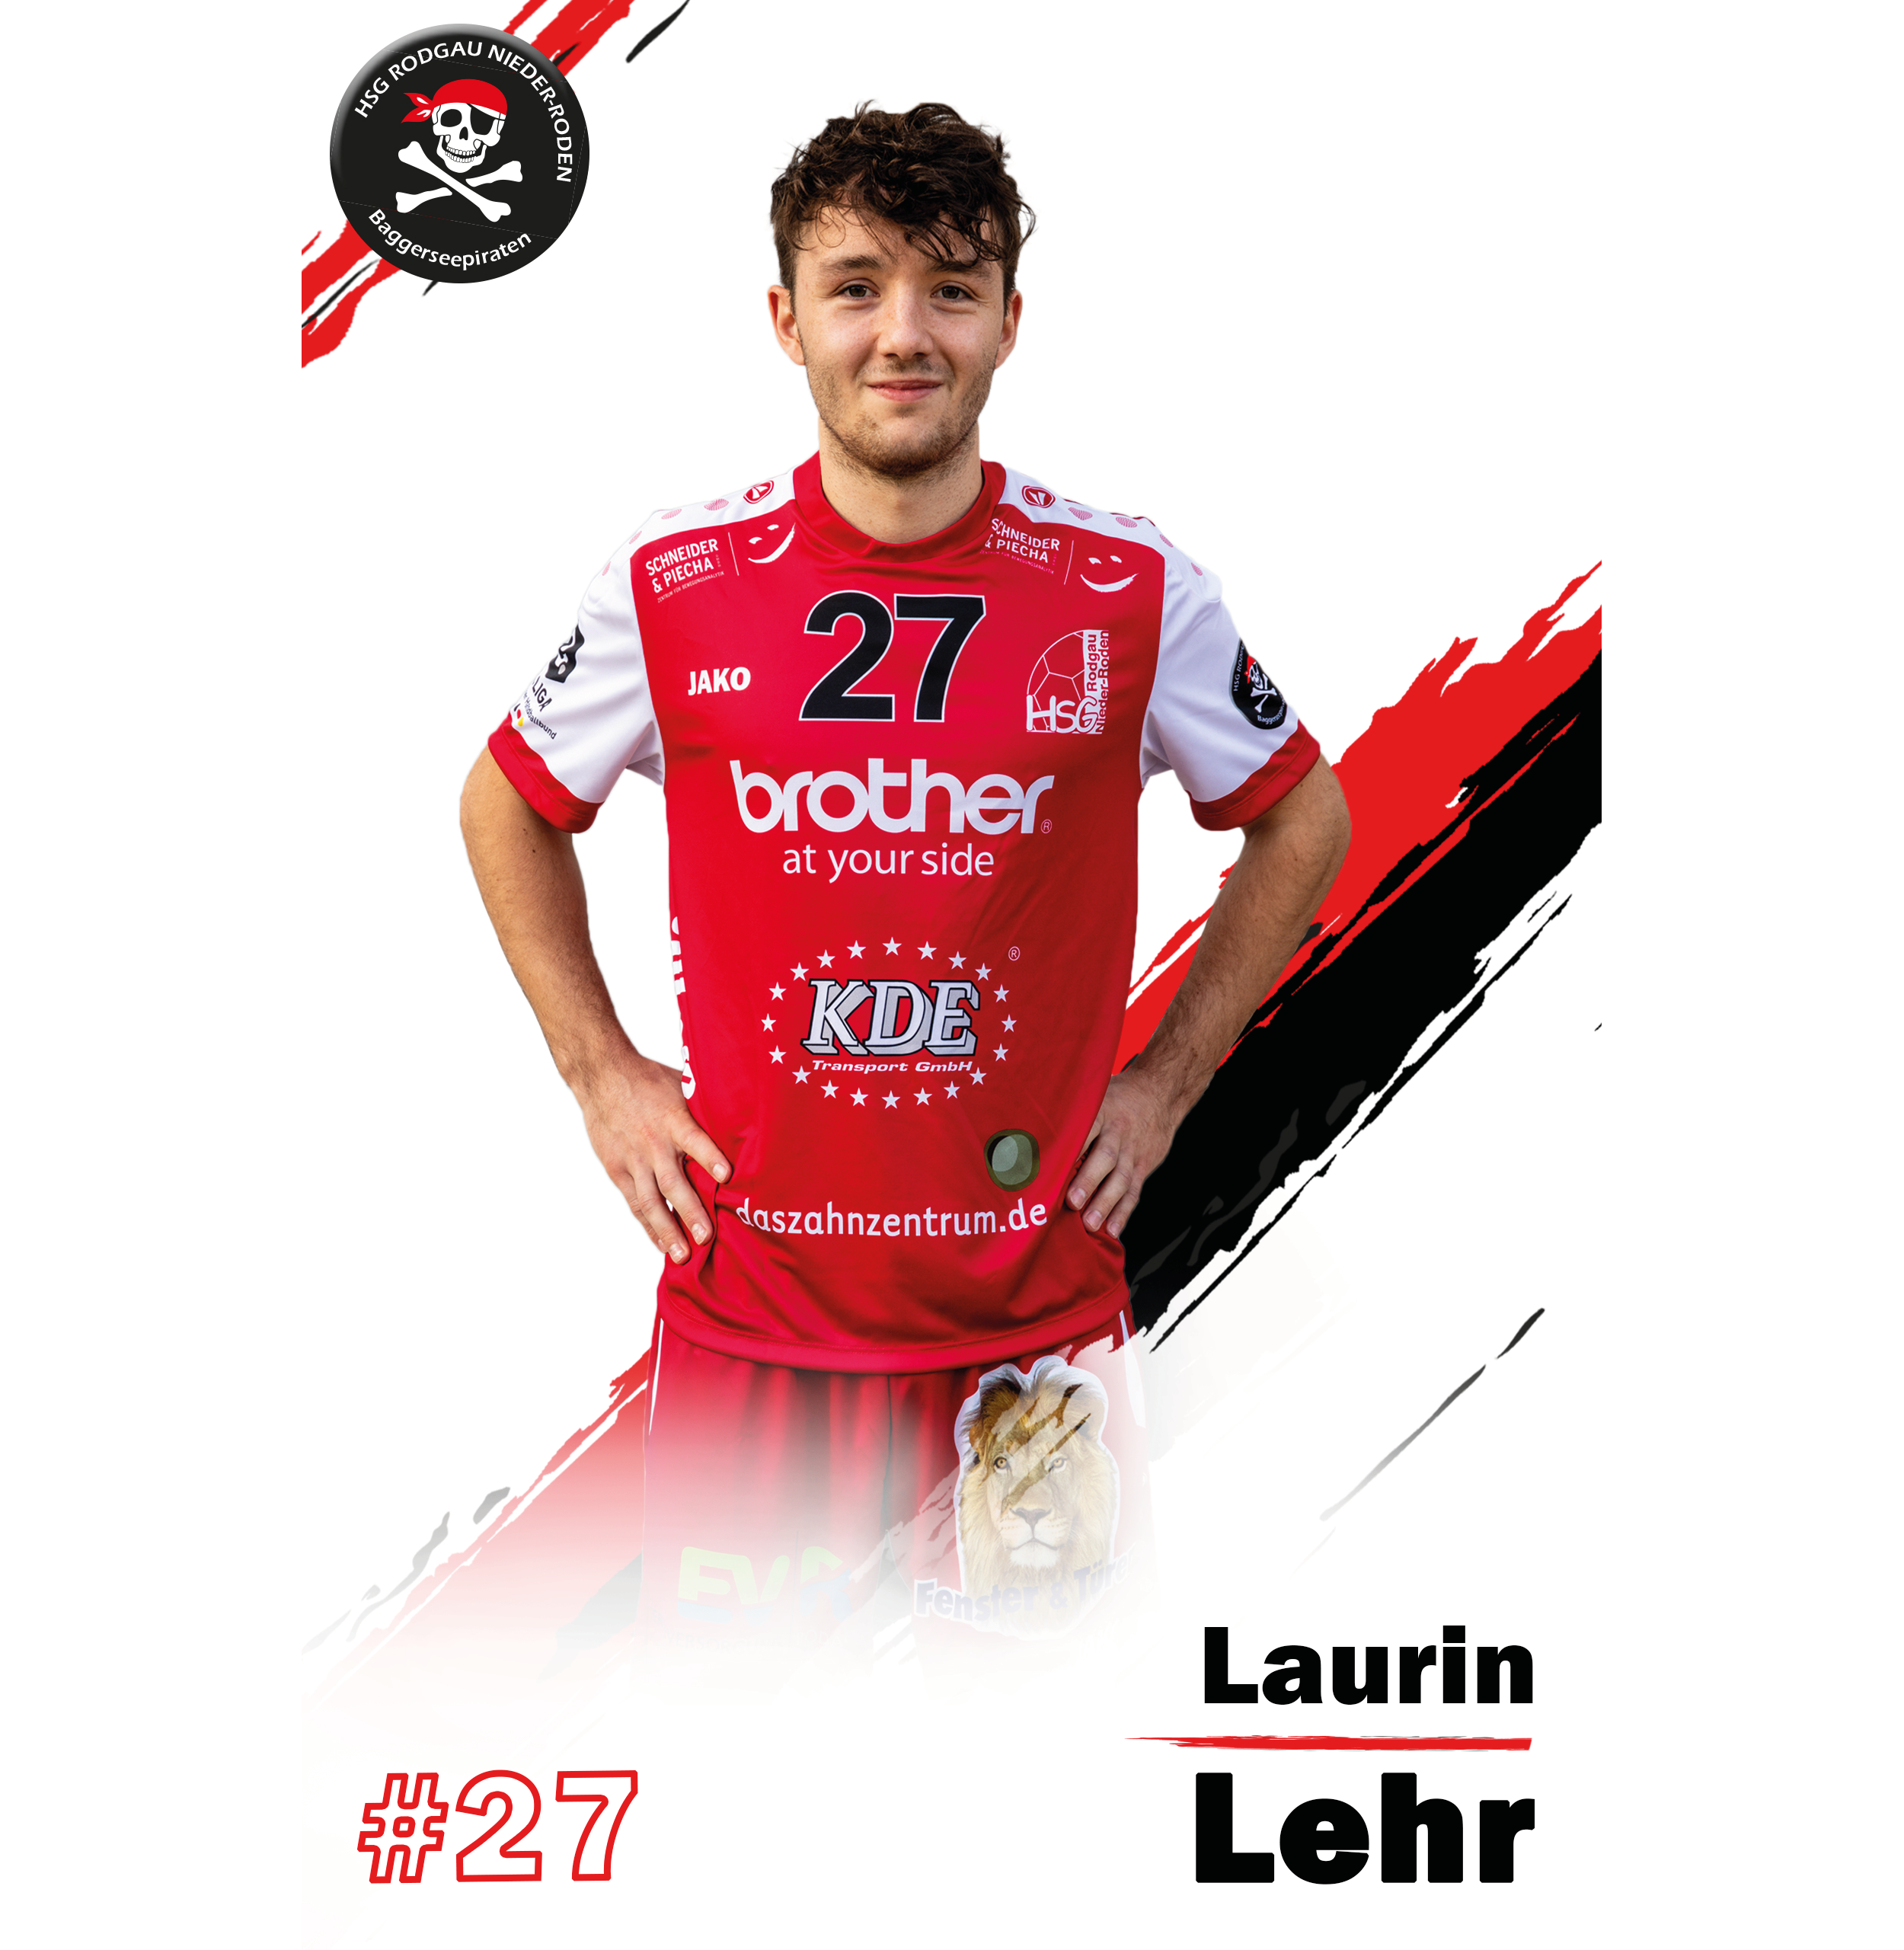 Laurin Lehr